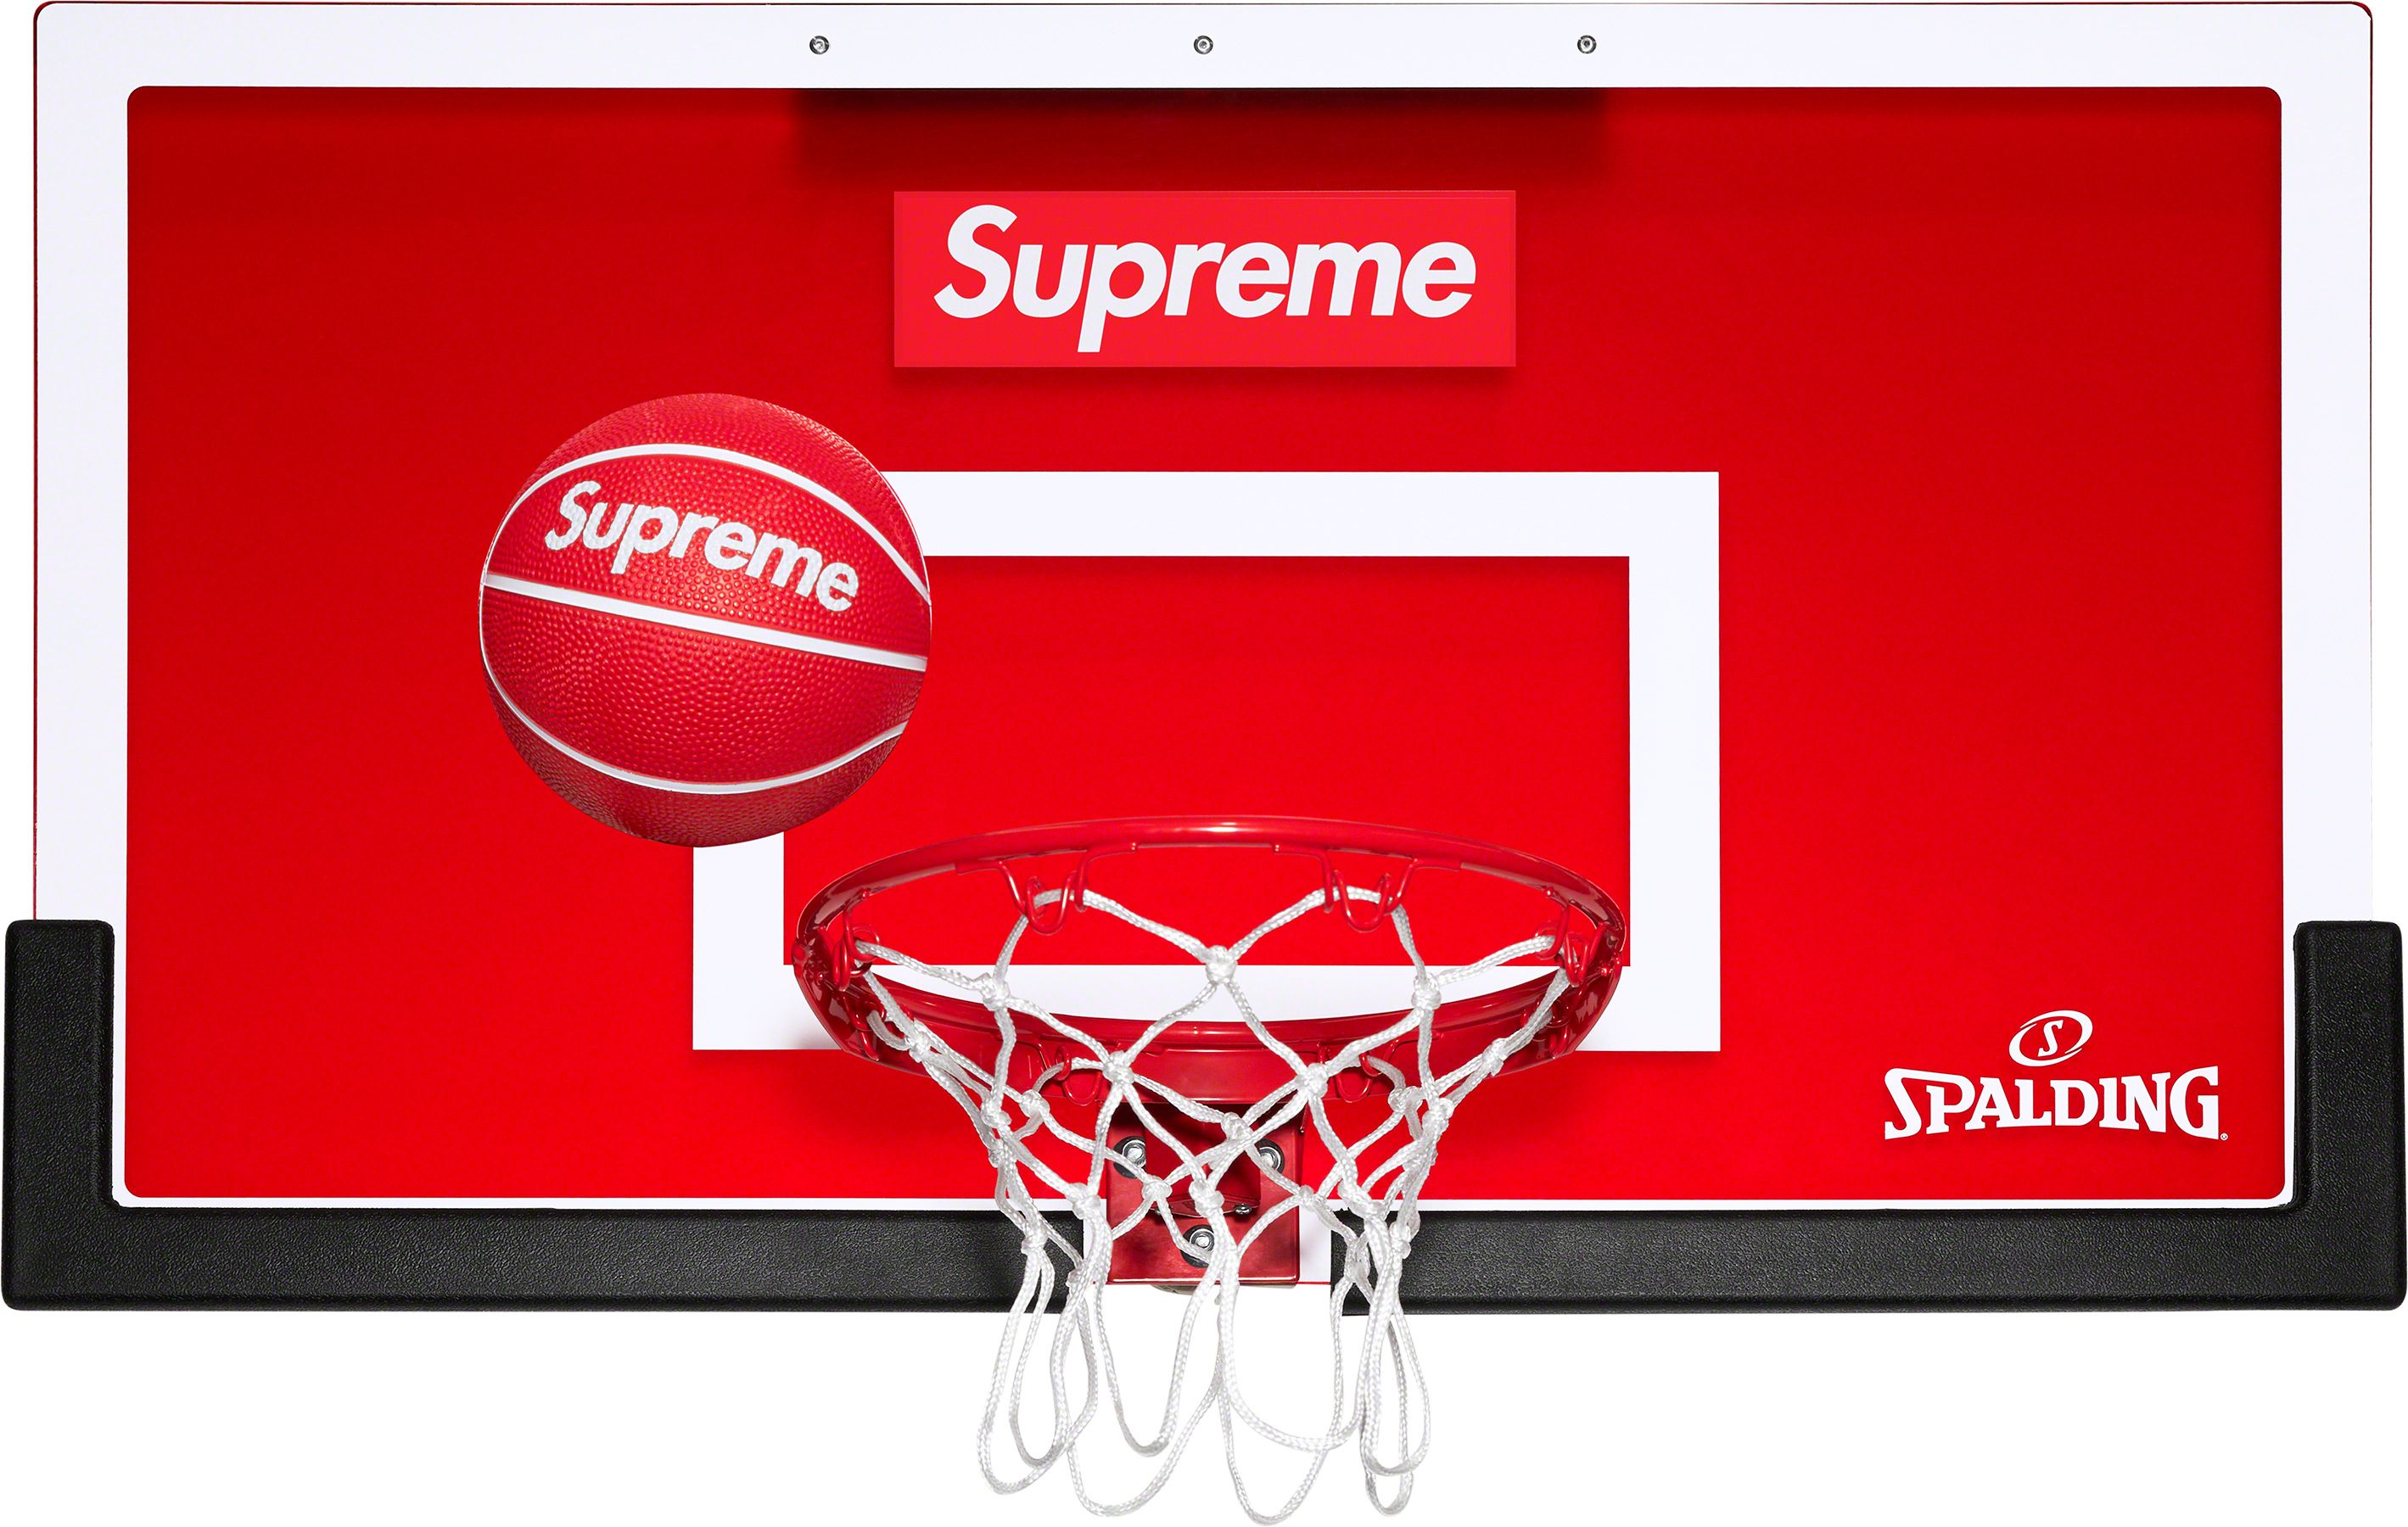 【新品未開封】Supreme Spalding Mini BasketballSup